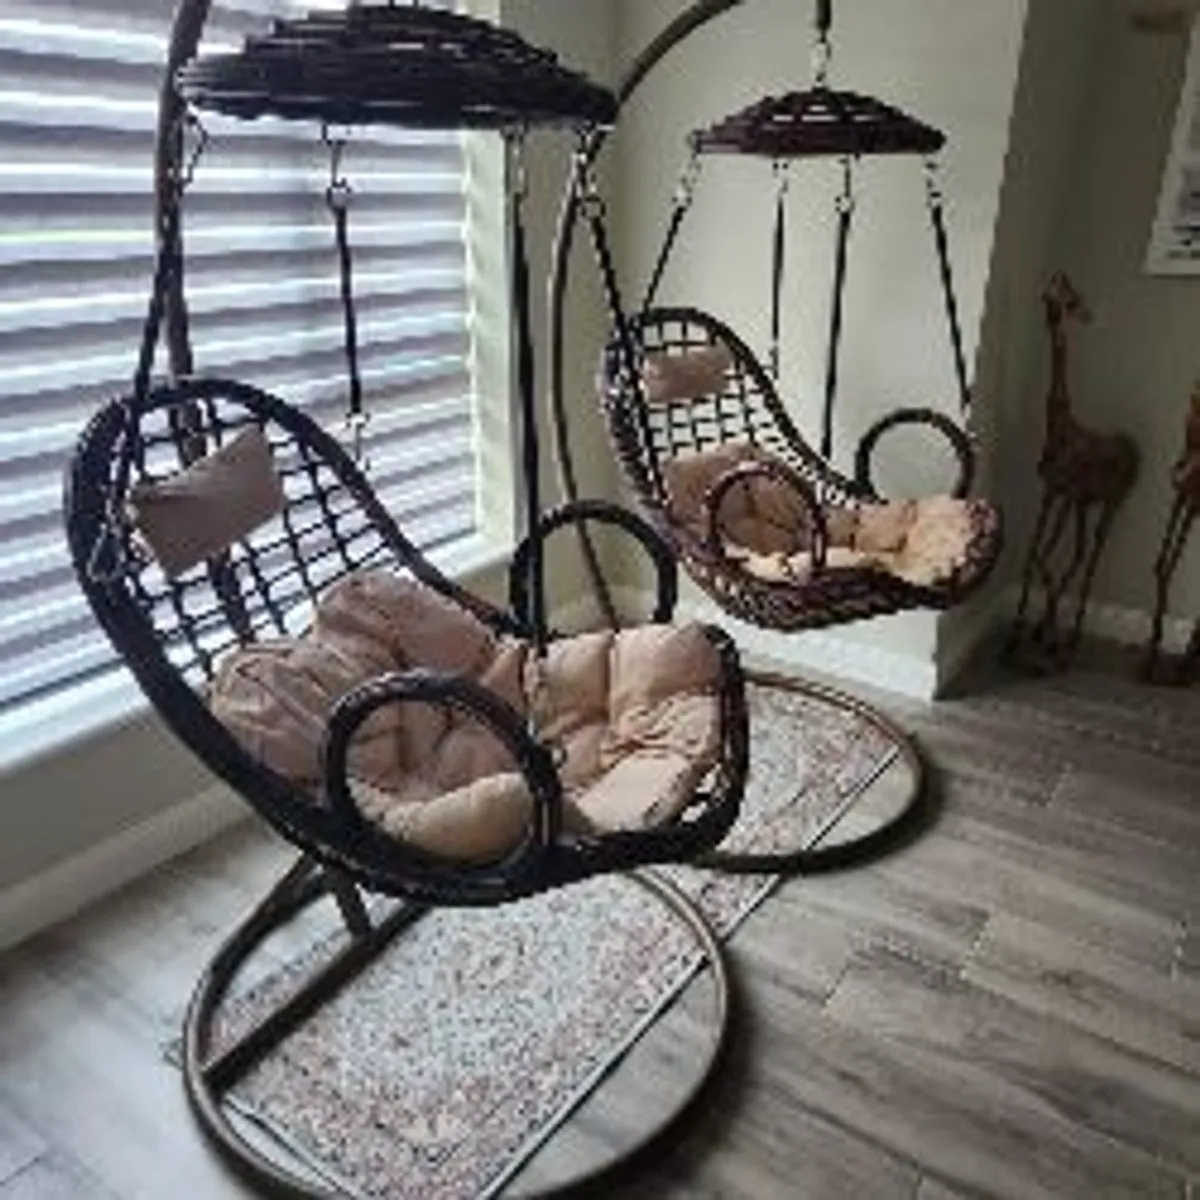 Basket patio swing chairs